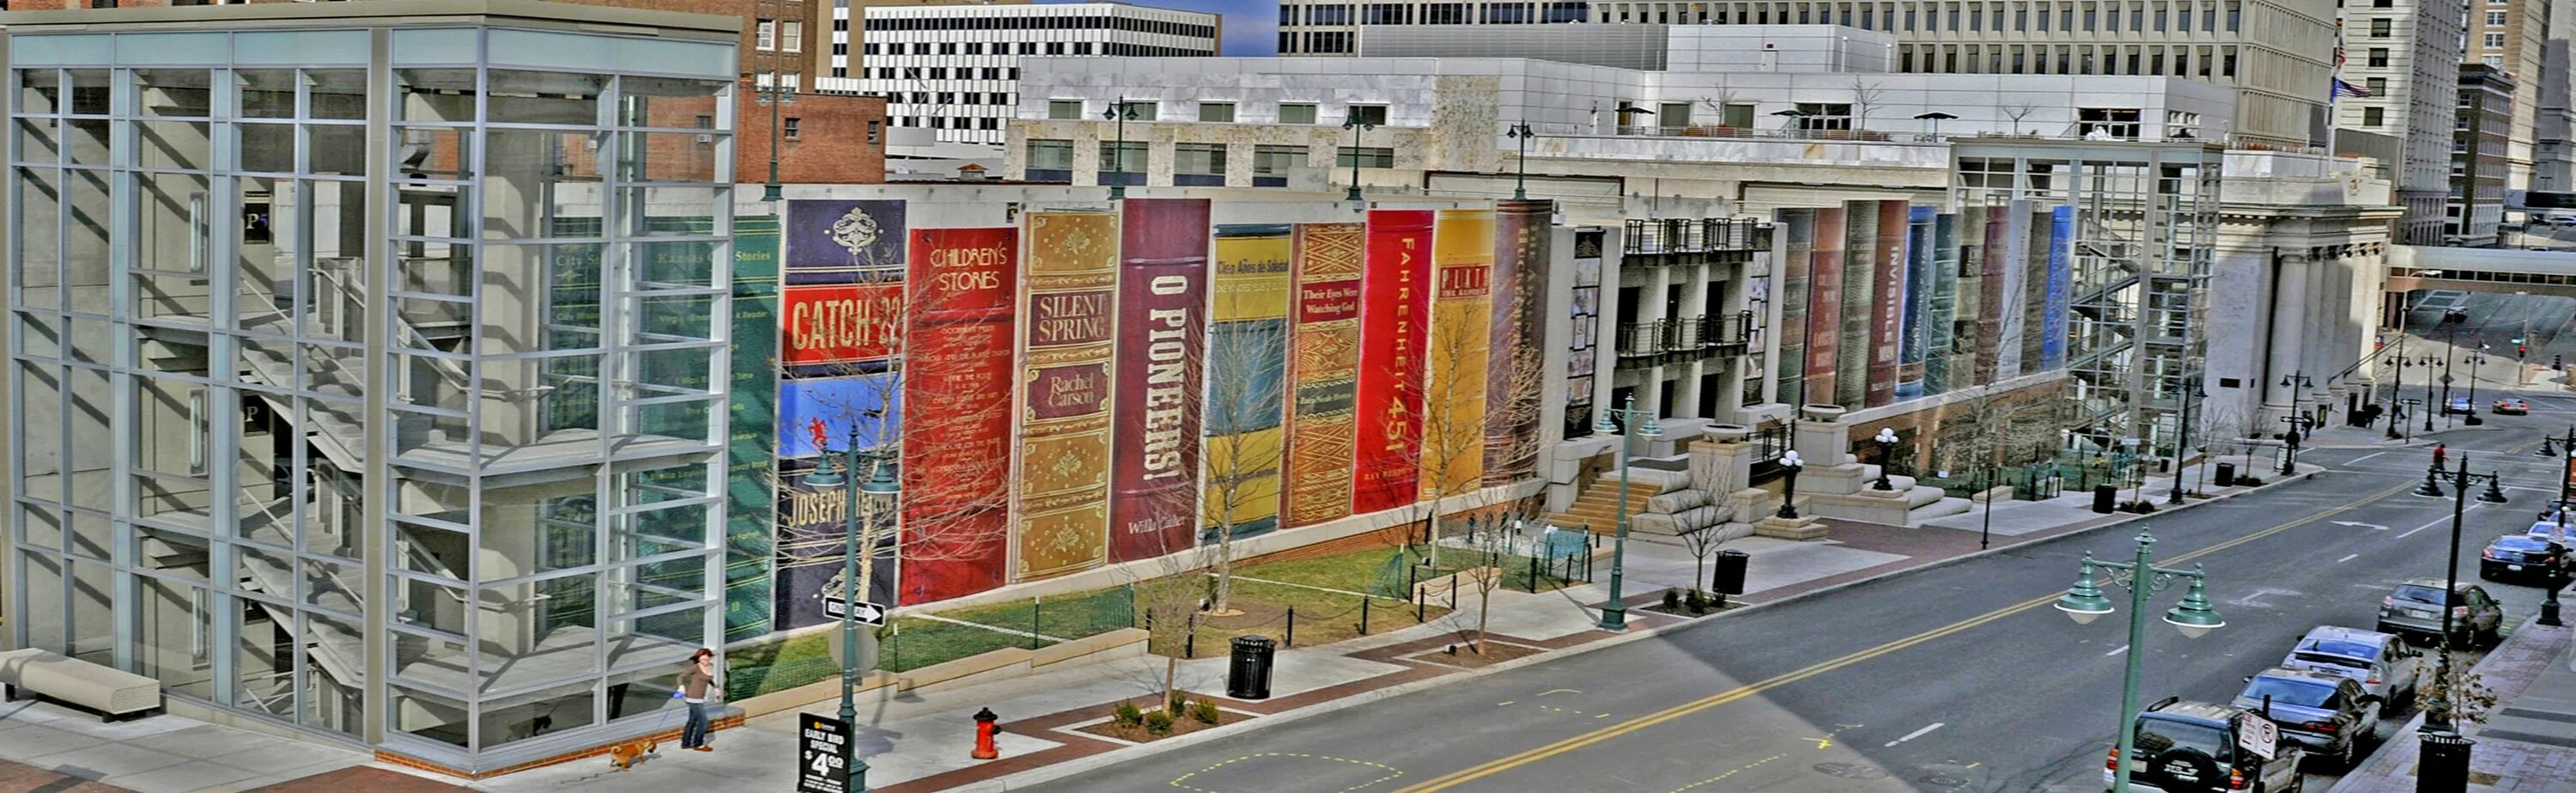 City library. Публичная библиотека Канзас-Сити (Канзас, США). Центральная библиотека Канзас-Сити штат Миссури США. Библиотека в Канзас Сити в США. Публичная библиотека Канзас-Сити США внутри.